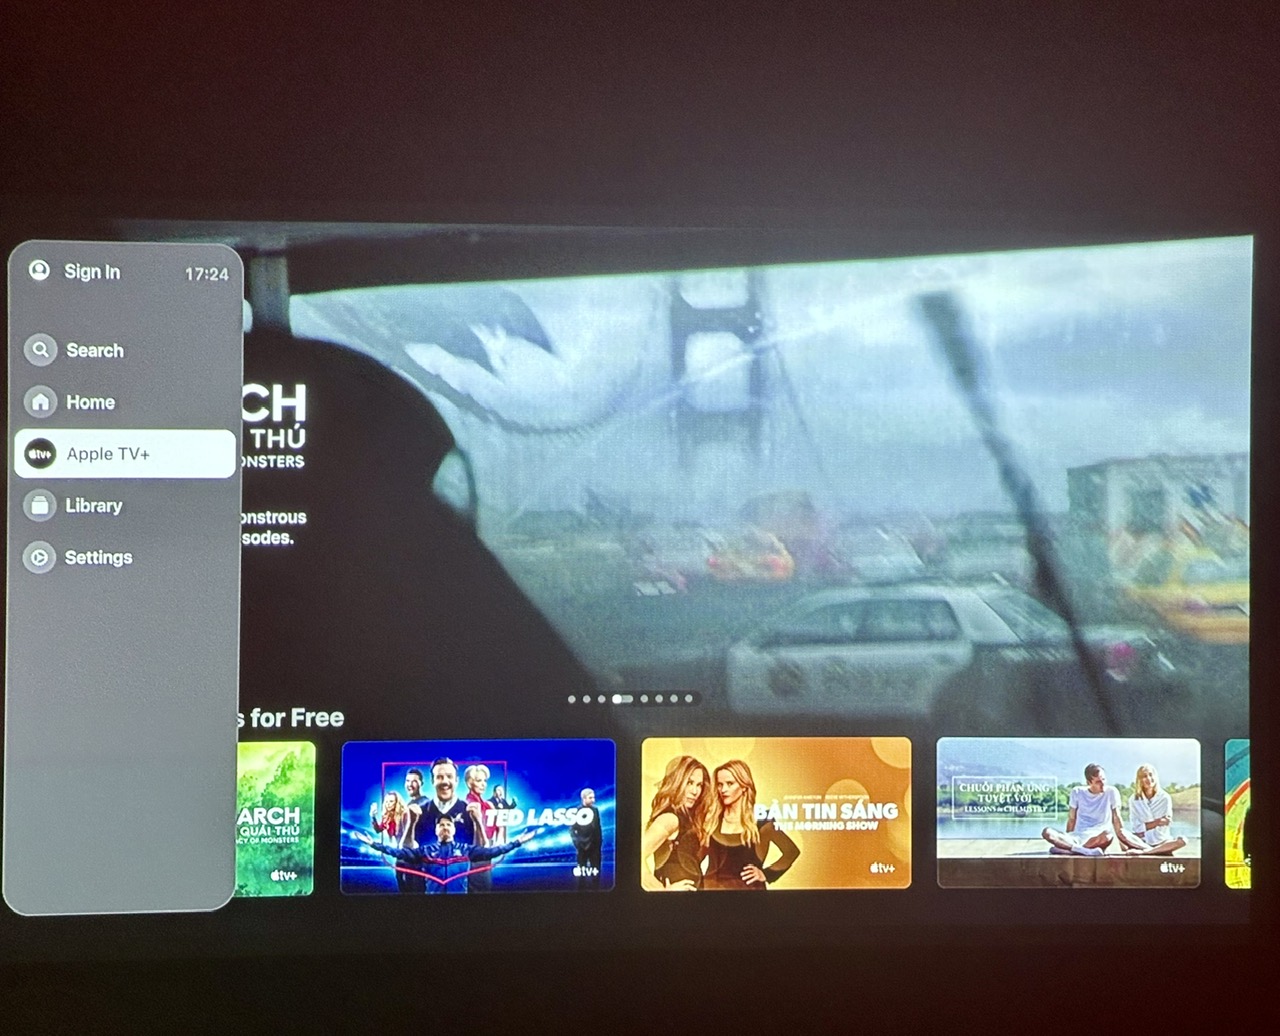 apple tv app screen appears on the nebula projector